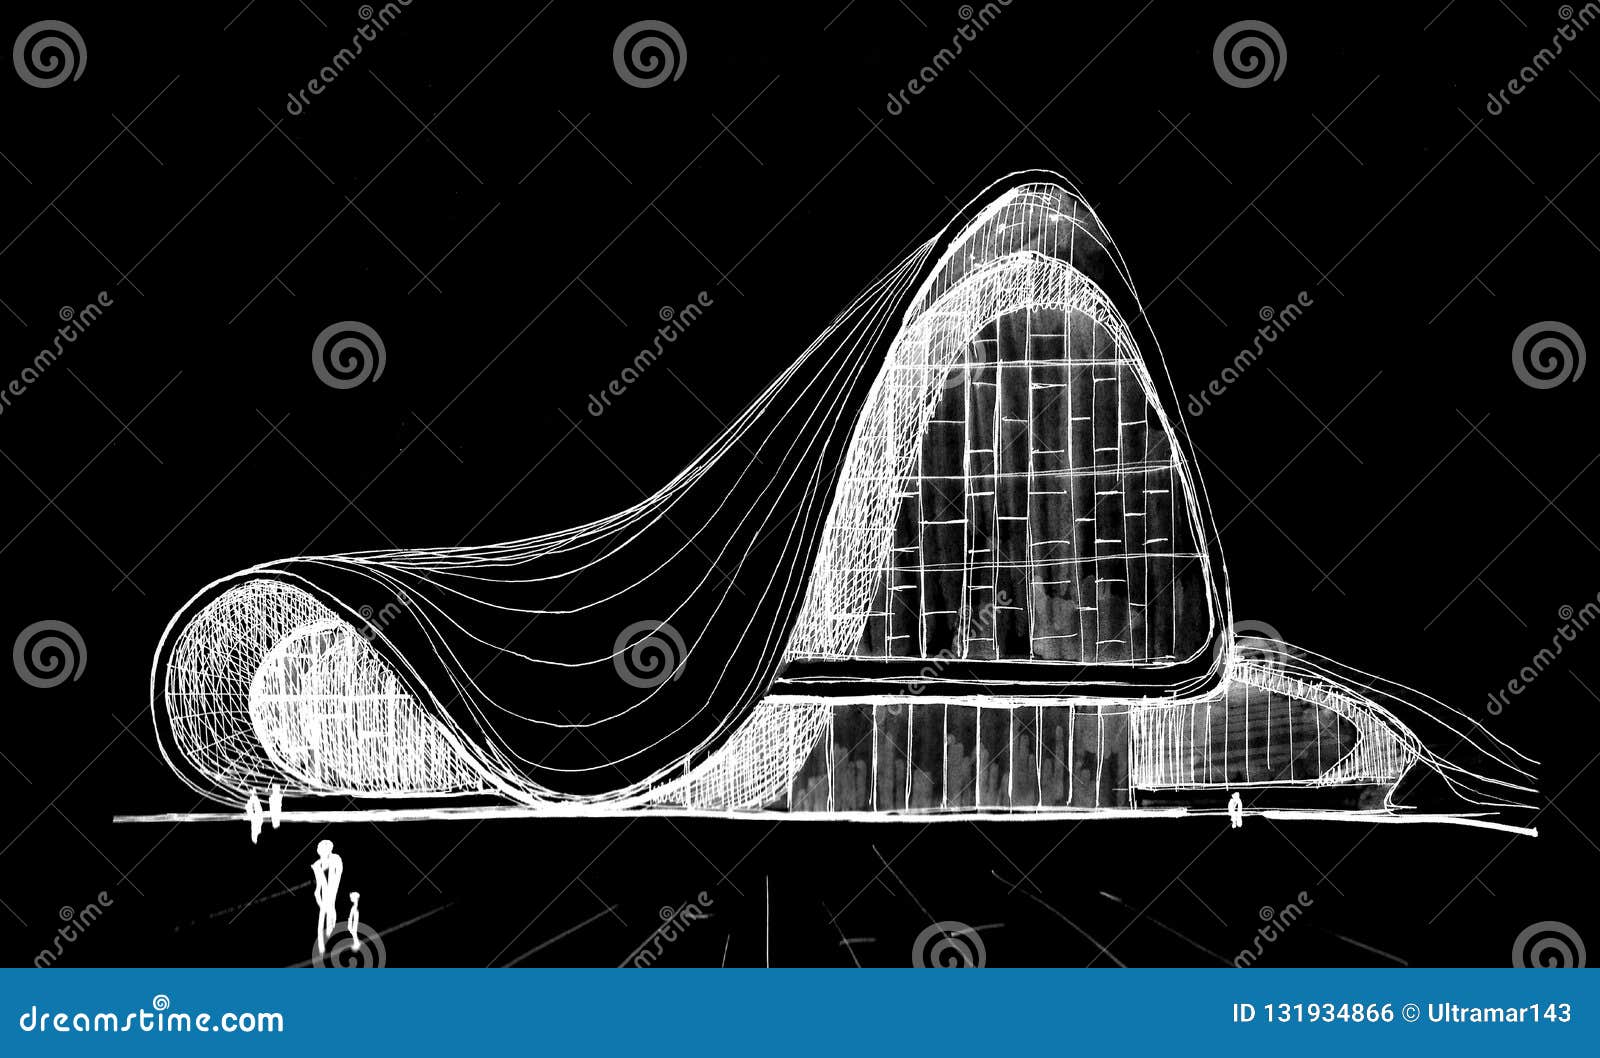 Heydar Aliyev Center Sketches